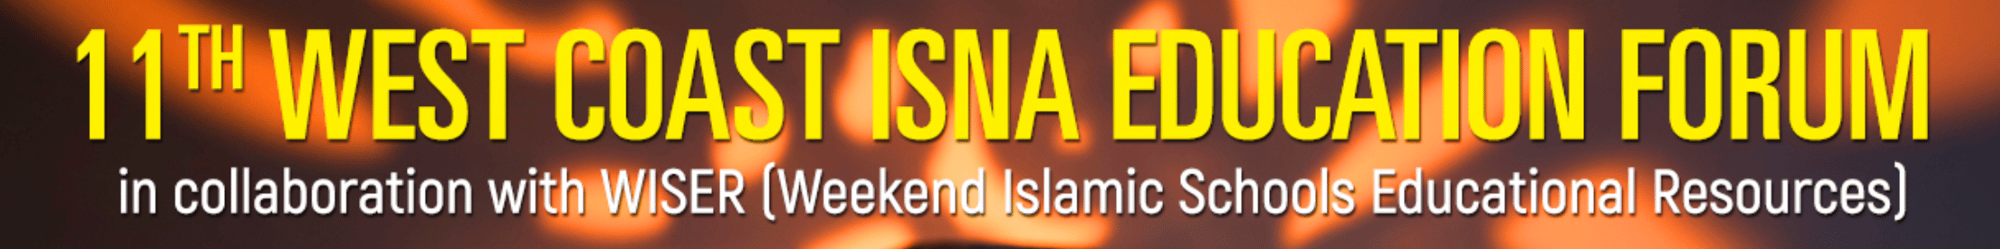 11th West Coast ISNA Education Forum